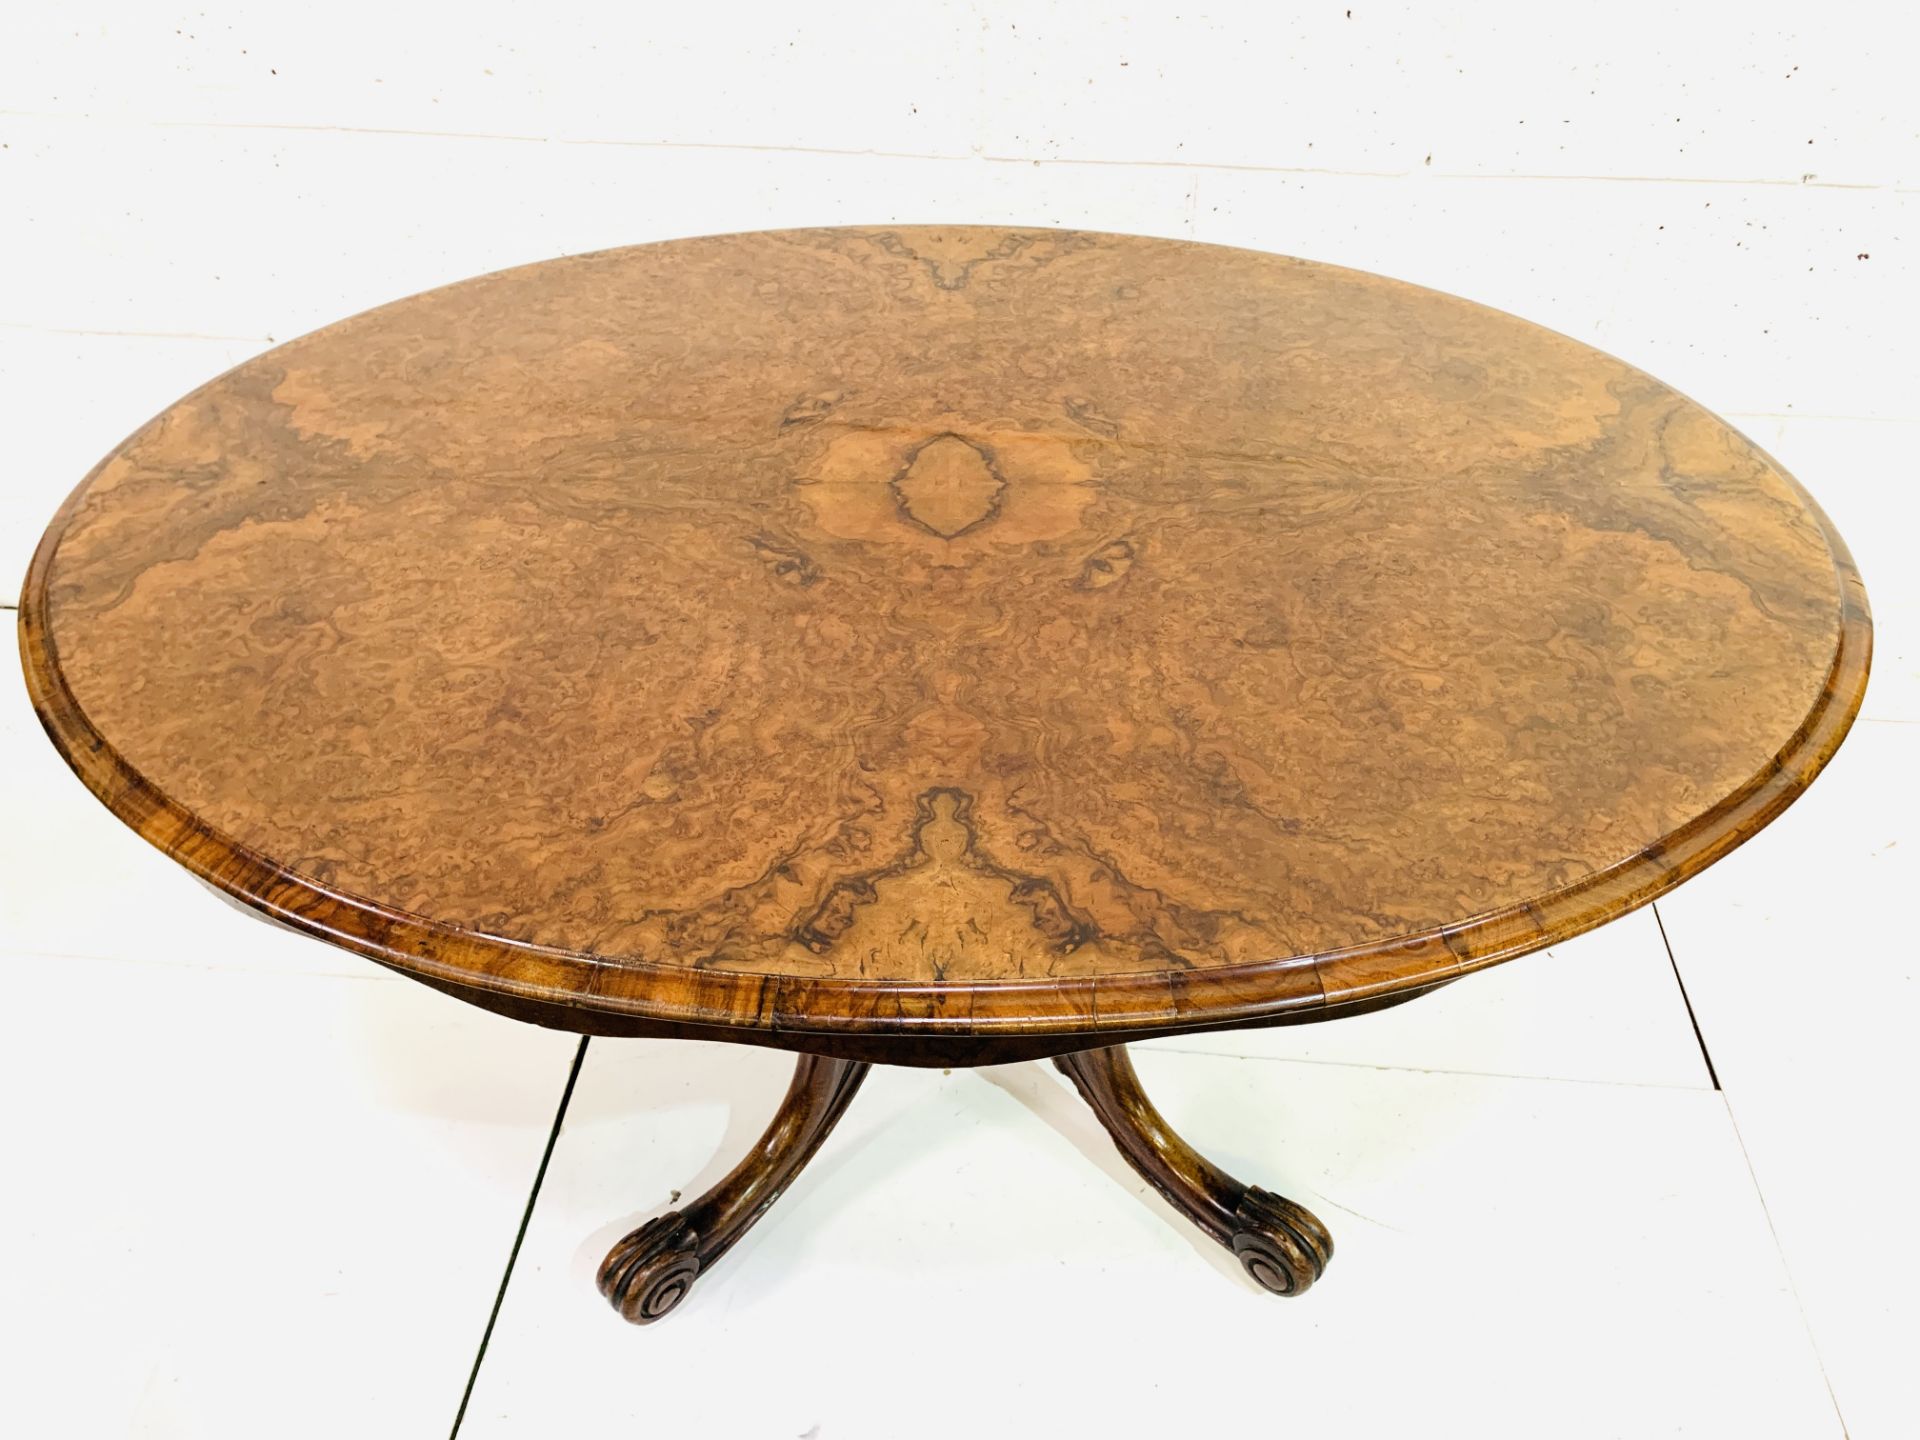 Walnut oval tilt top table - Image 9 of 11